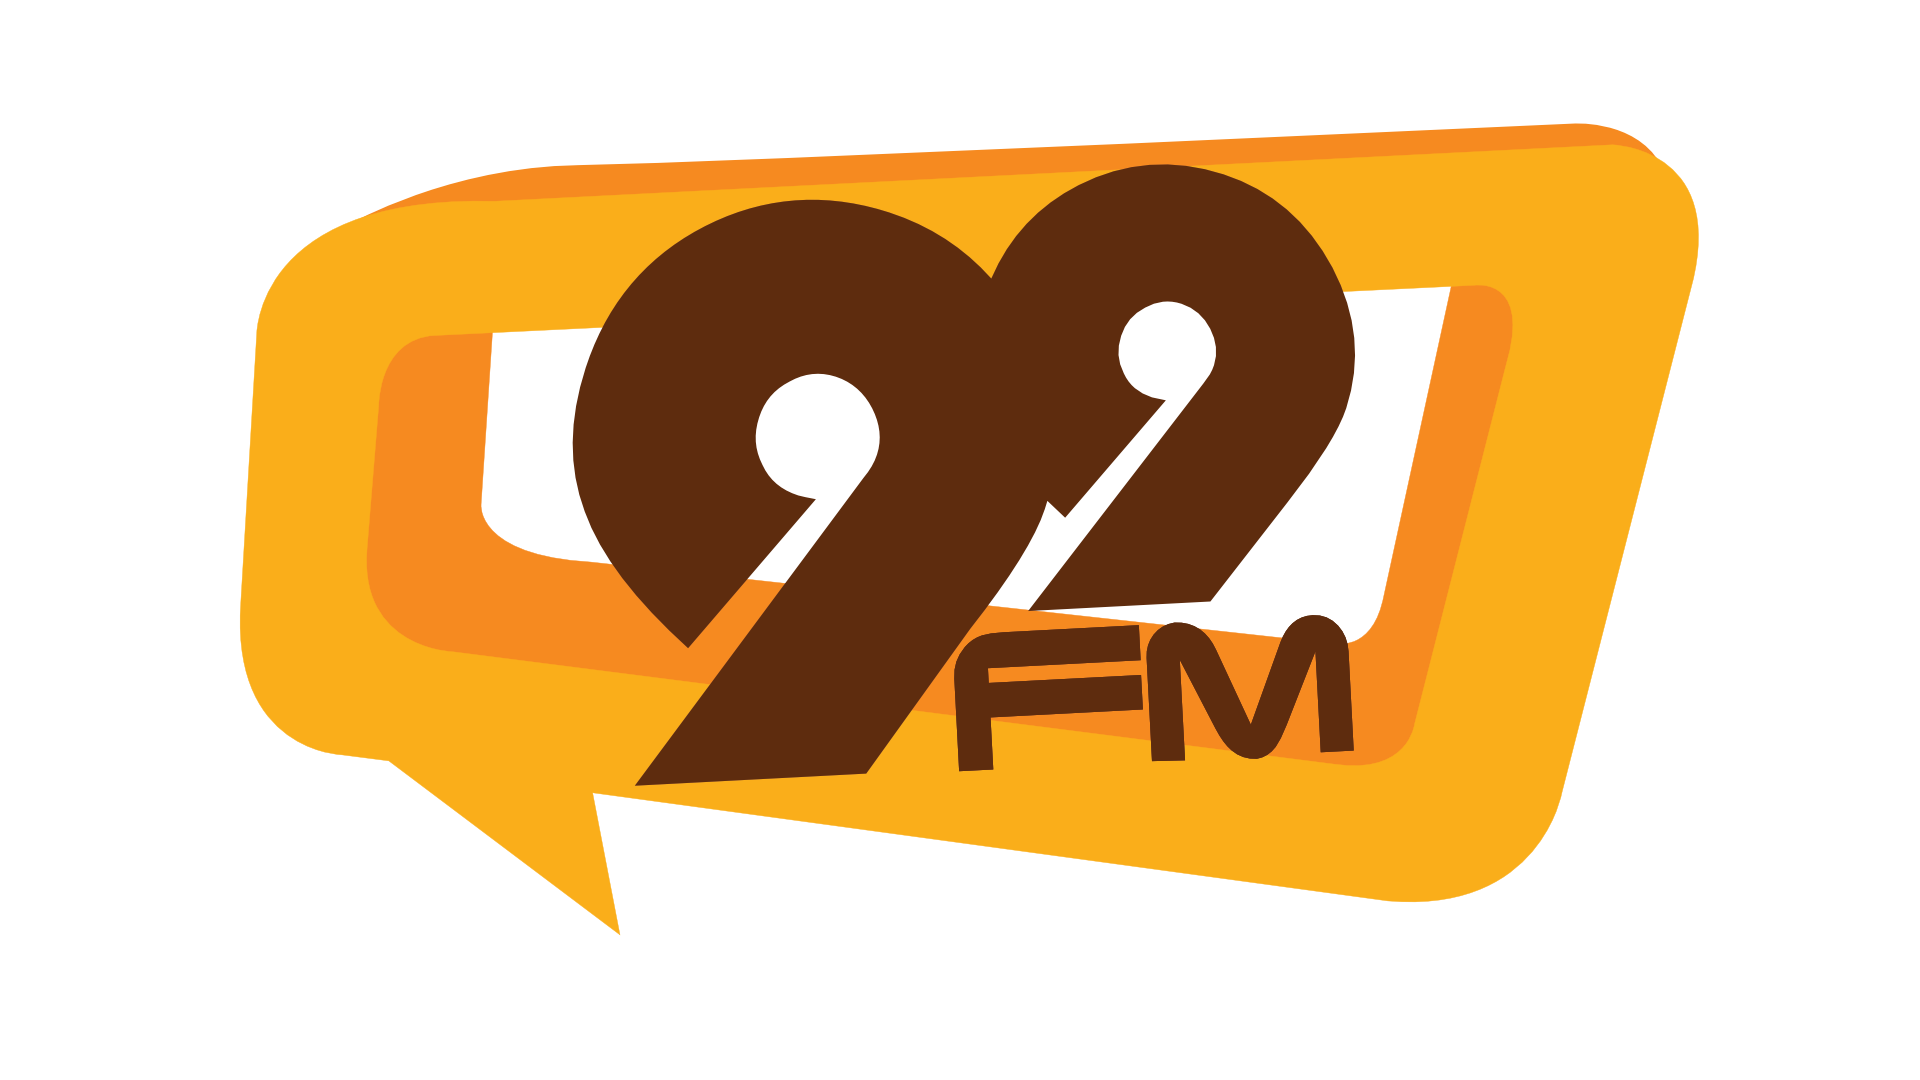 Final transparent 99FM logo 1